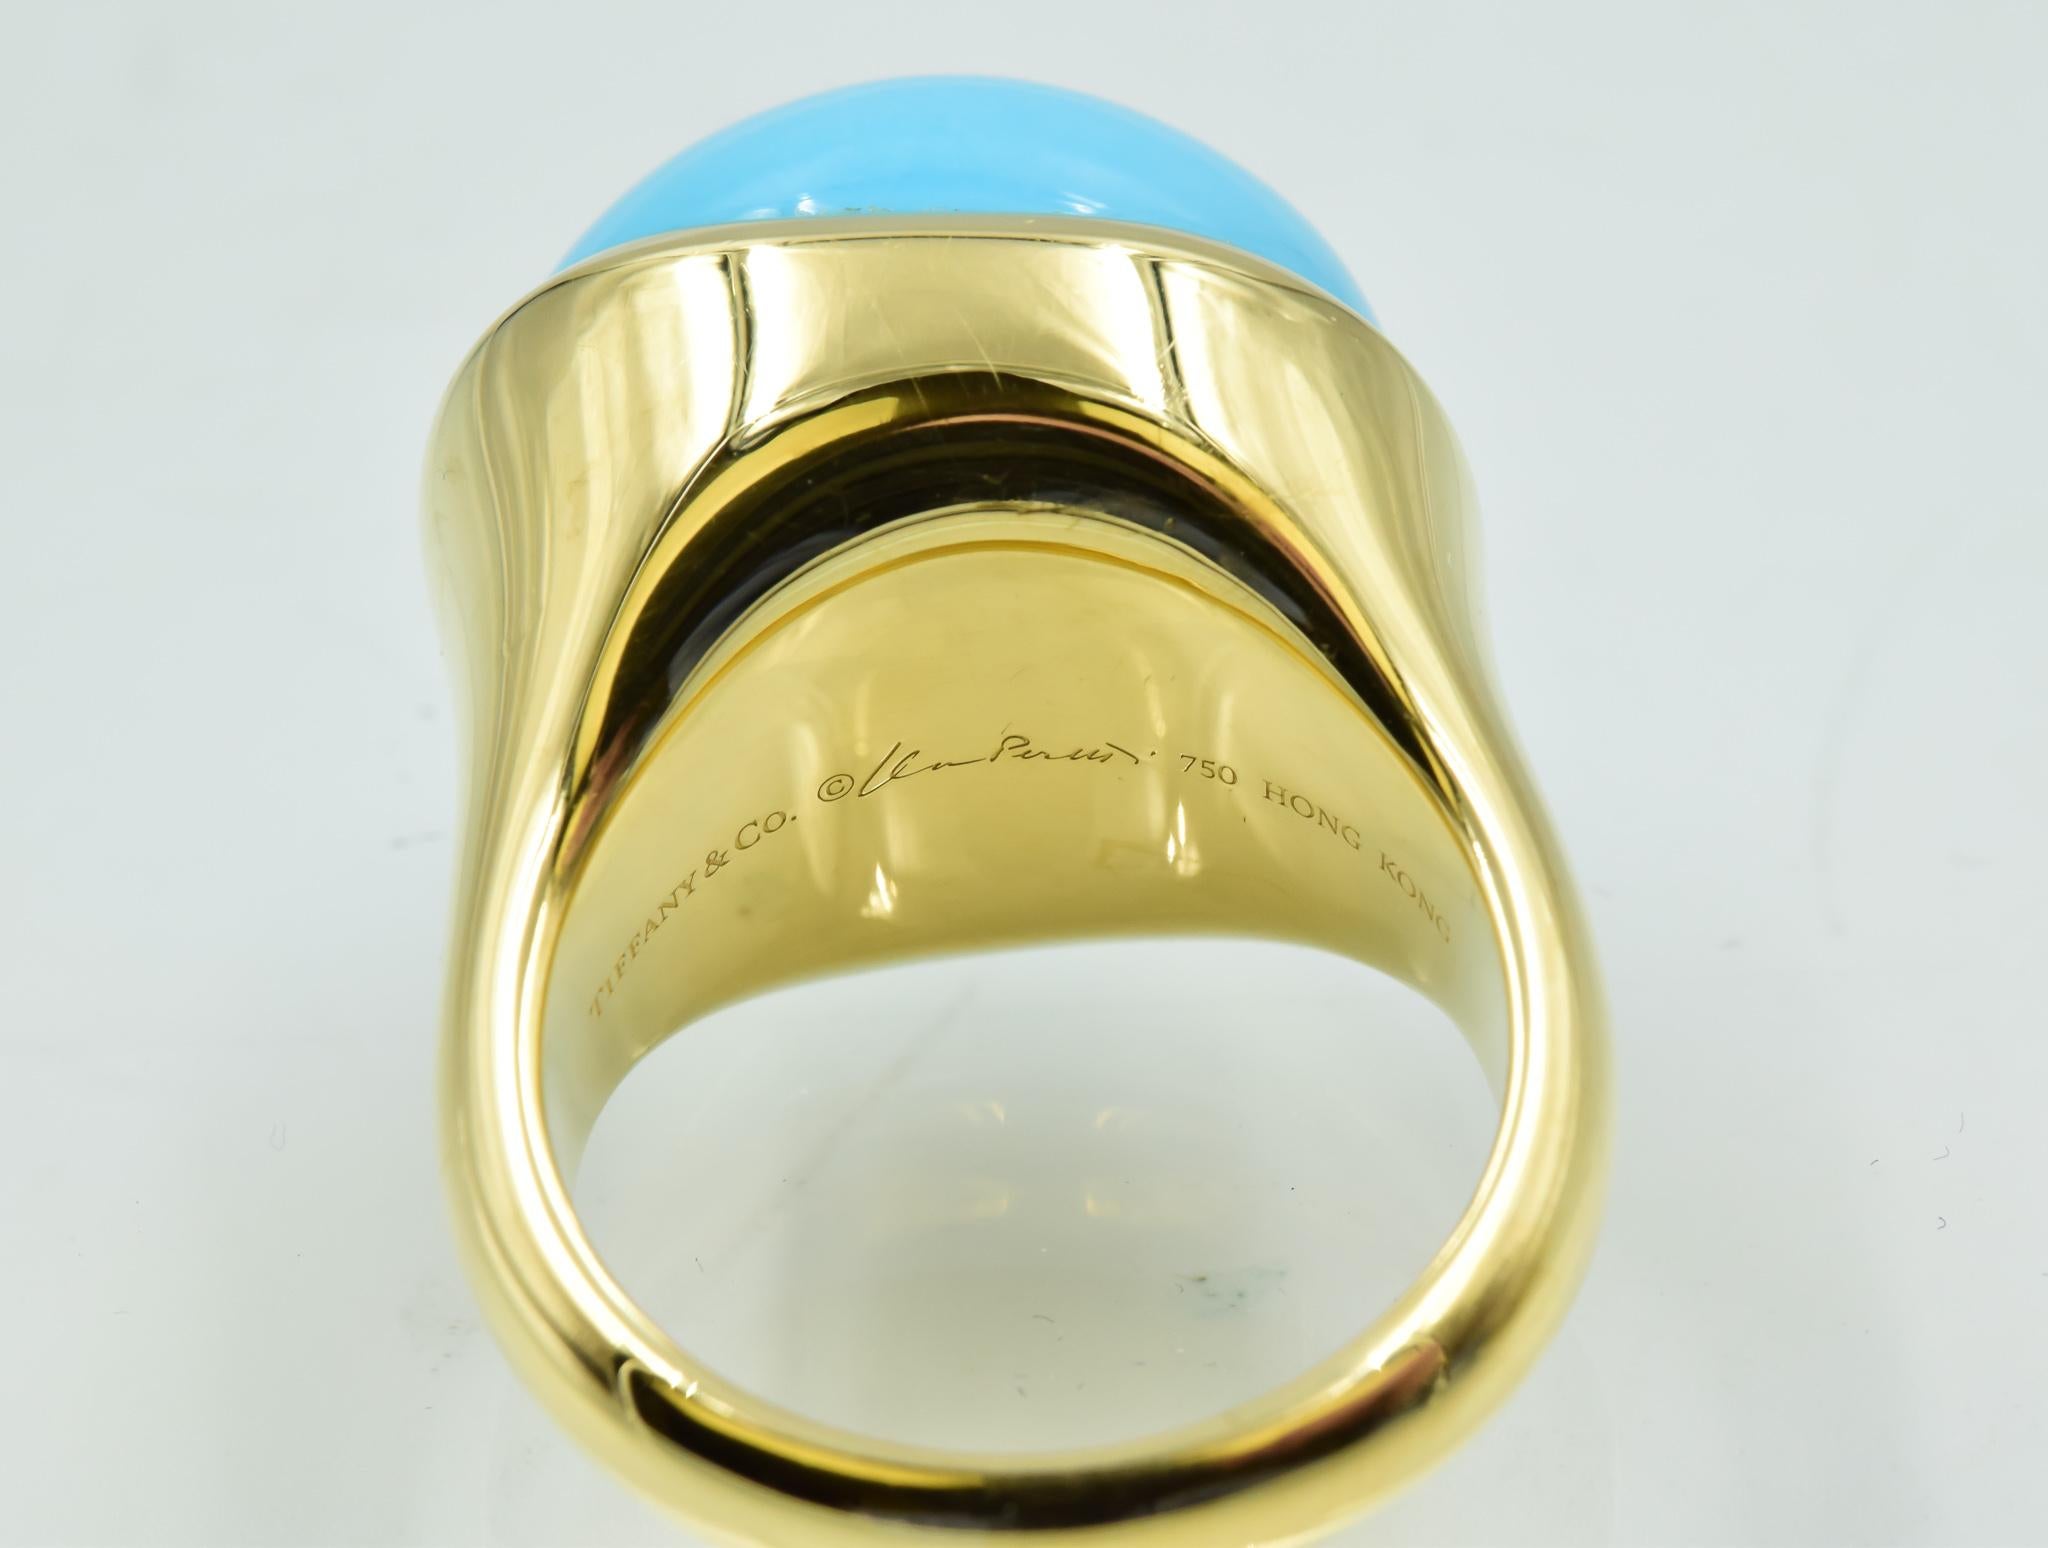 tiffany turquoise ring